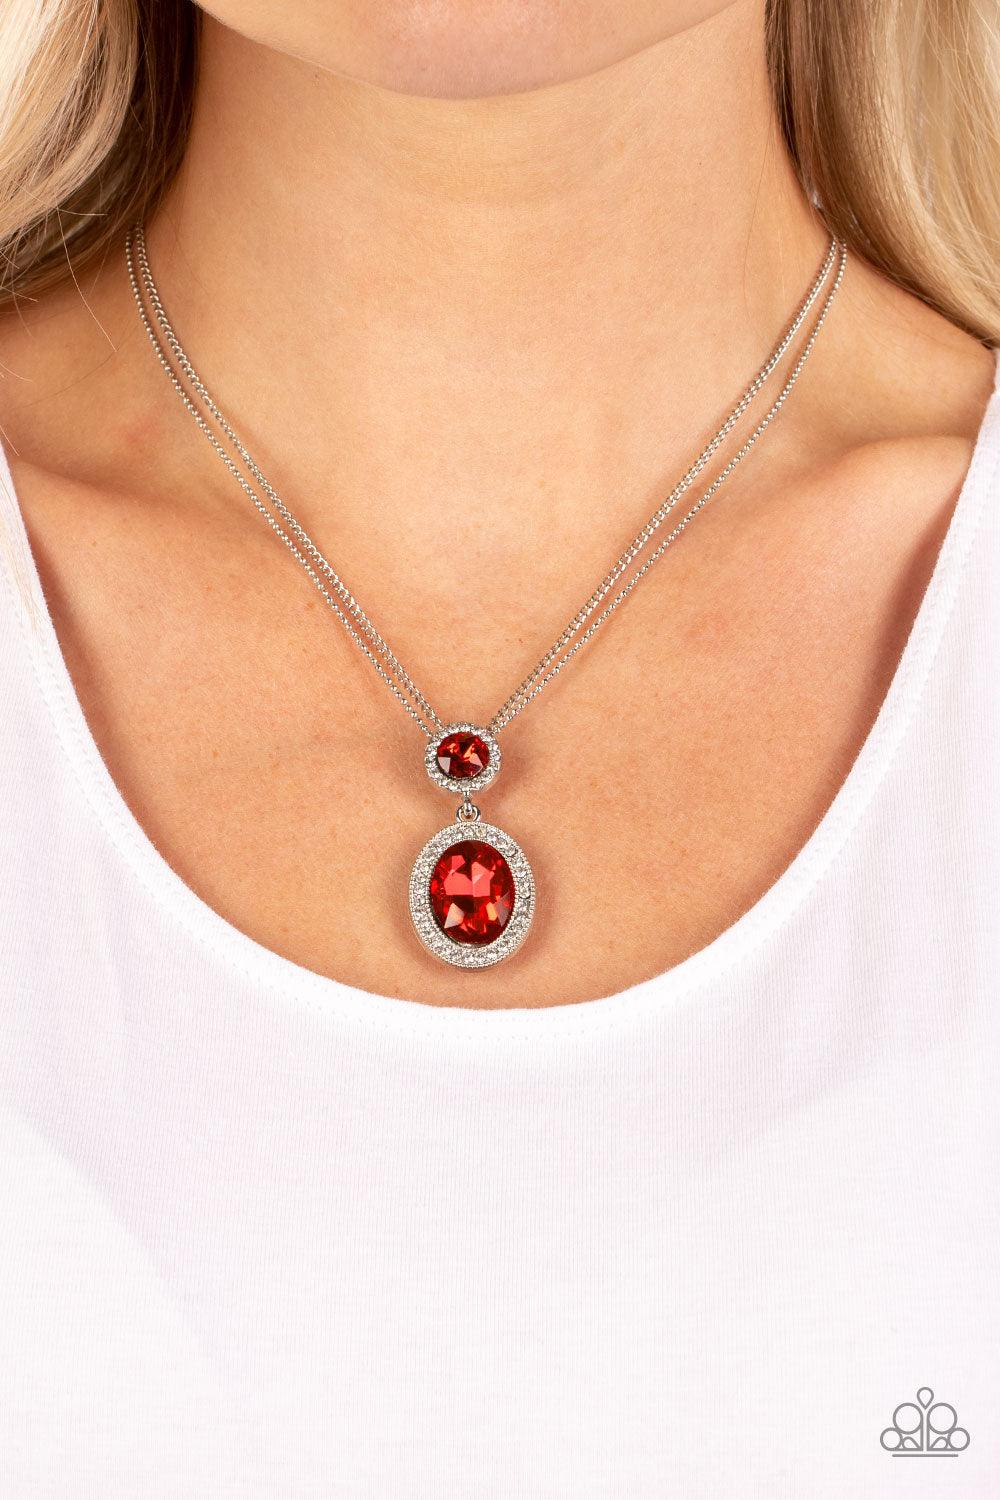 Castle Diamonds Red Necklace - Jewelry by Bretta